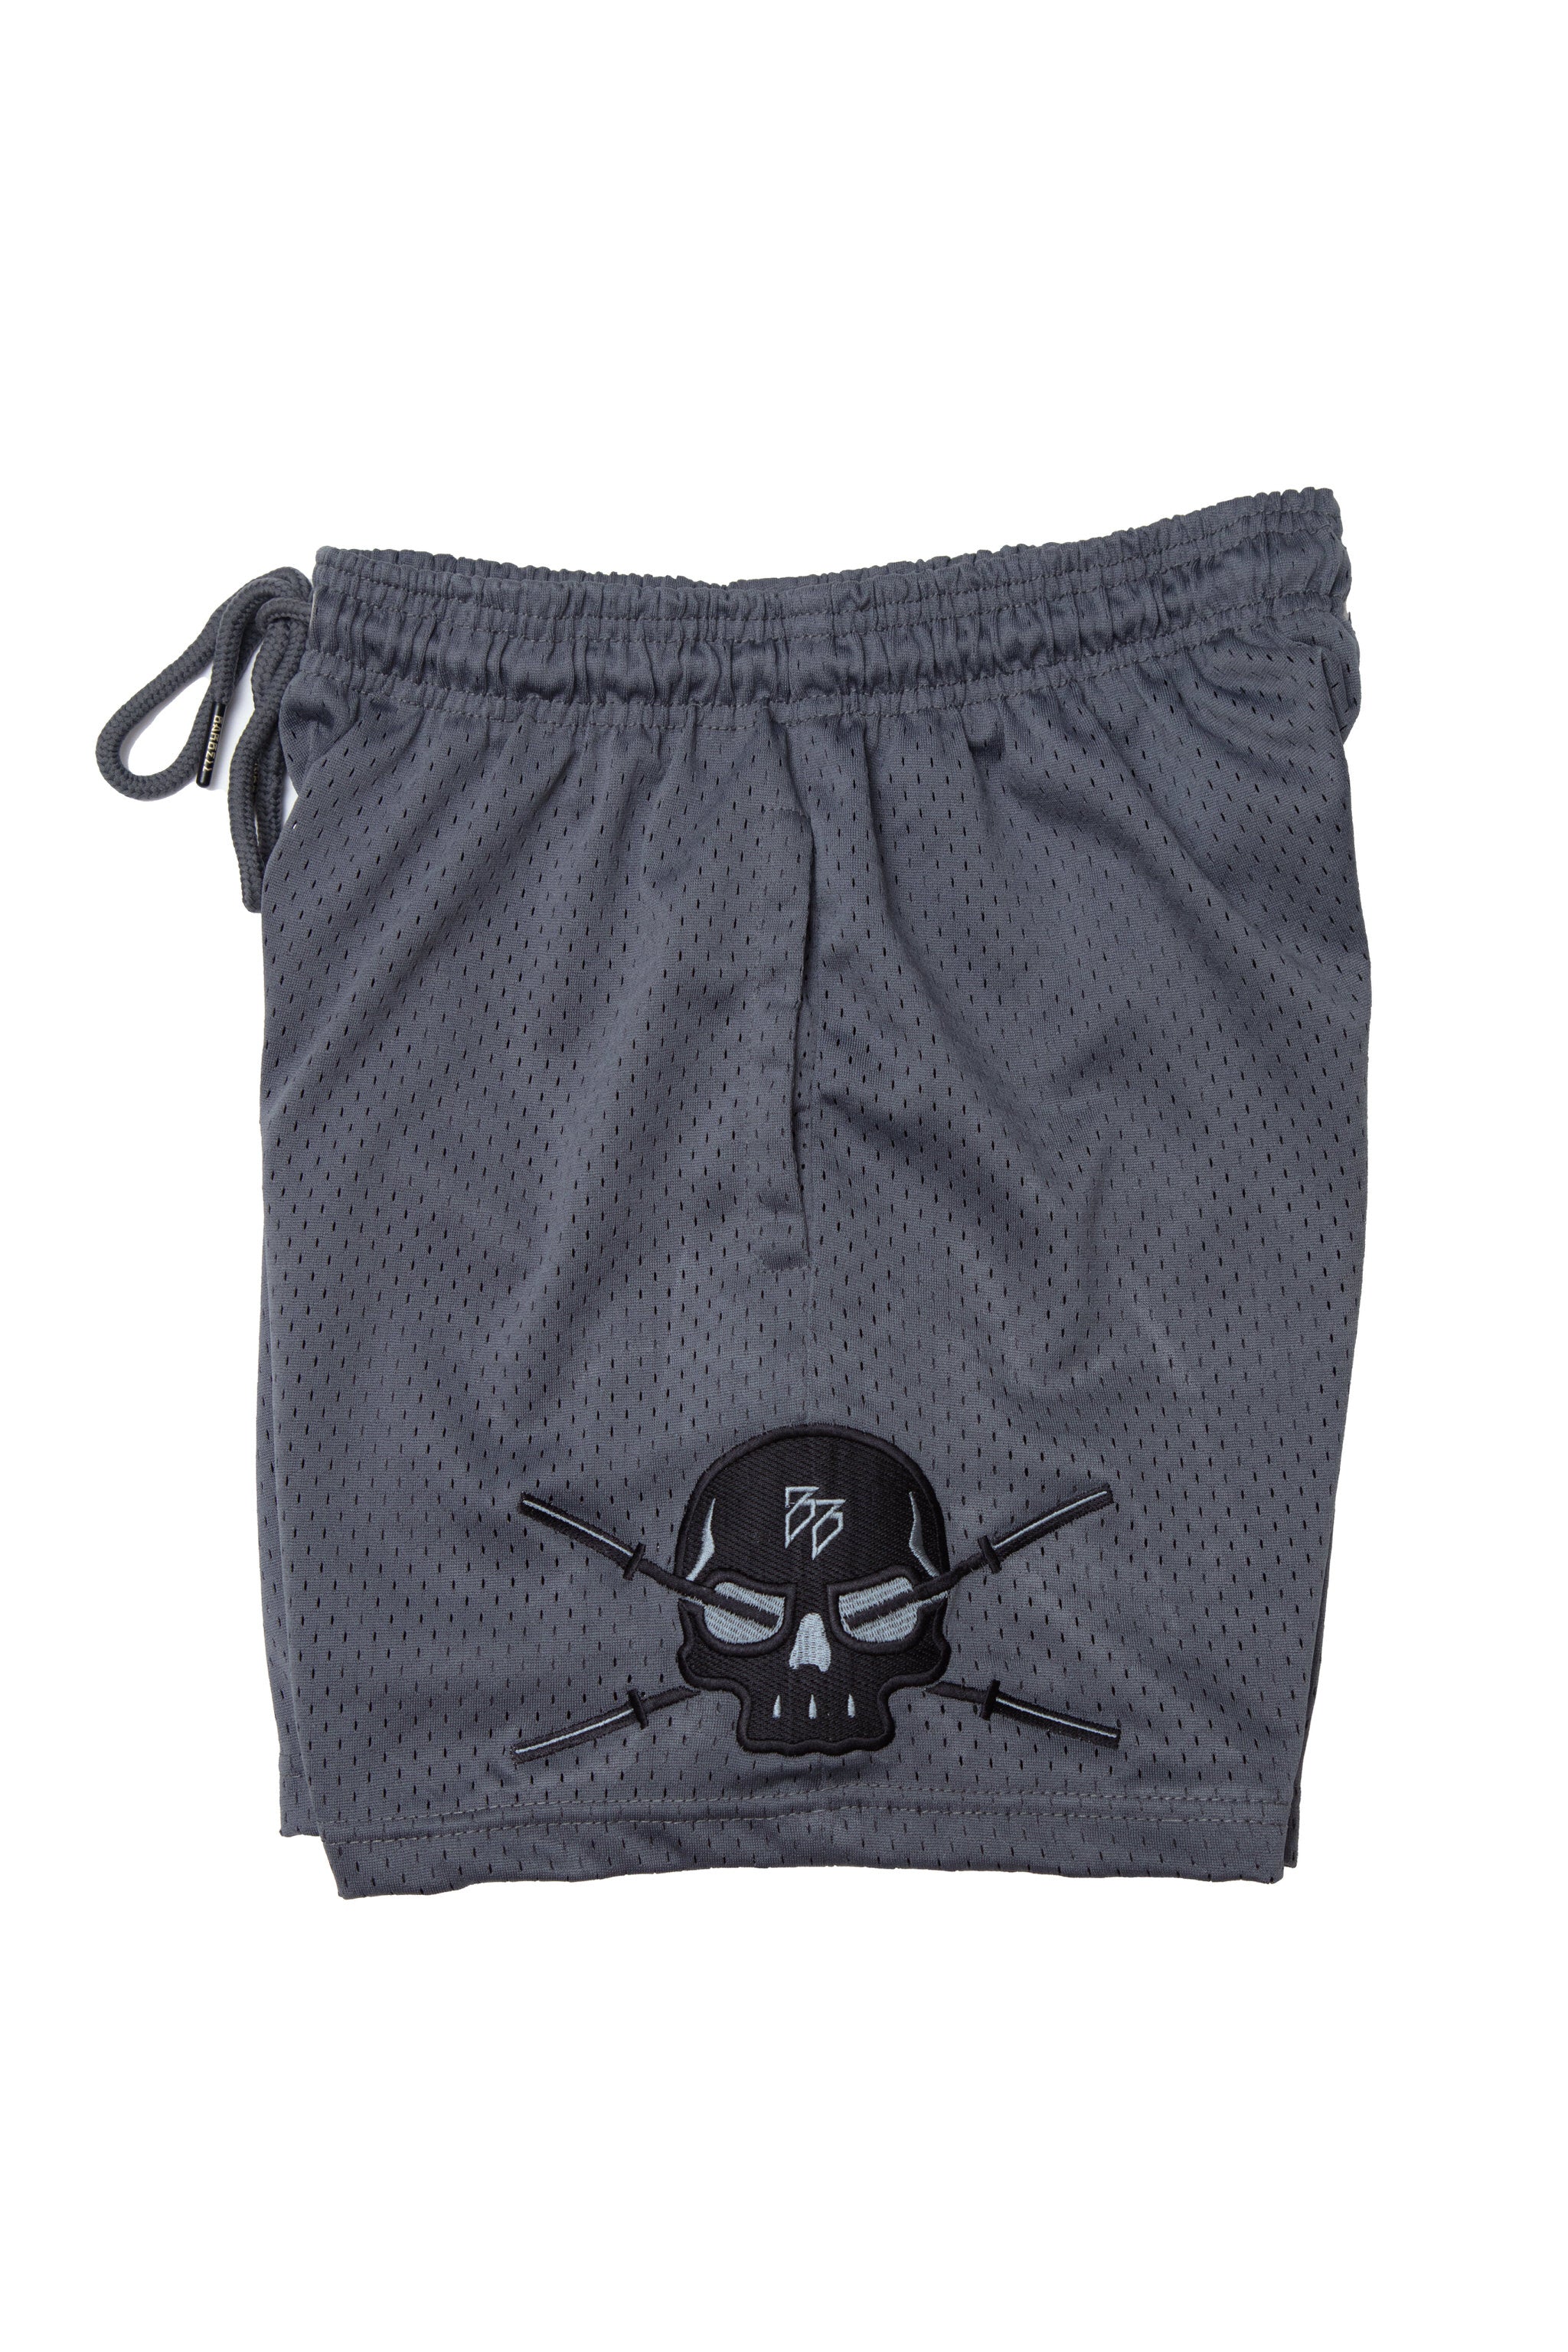 New Limits - Mesh Shorts (Grey With Black Skull)